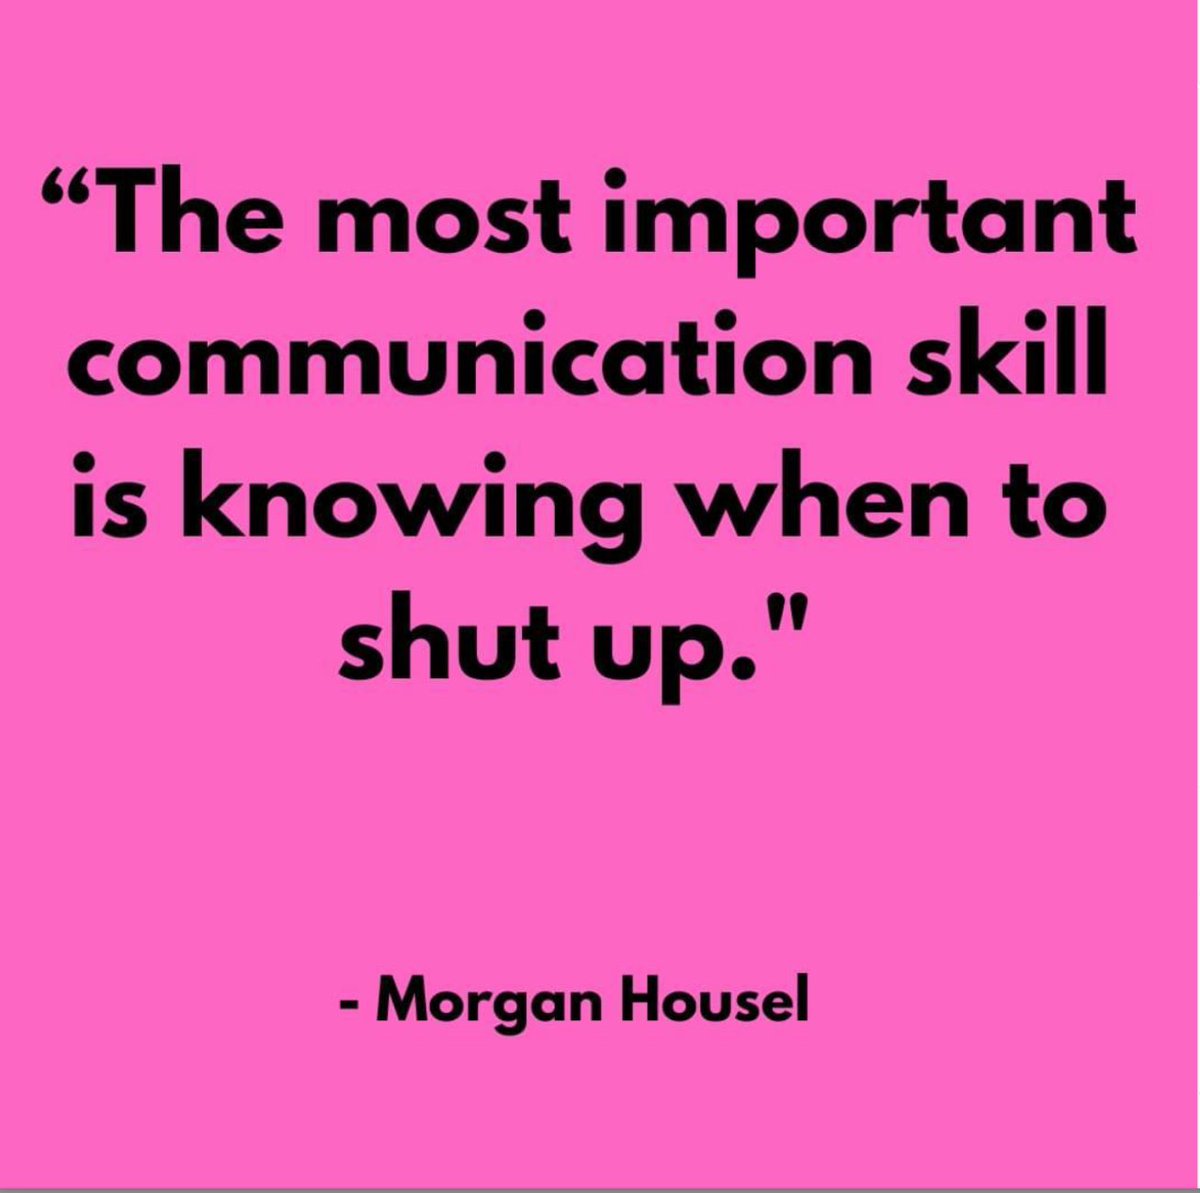 Tuesday wisdom from @morganhousel